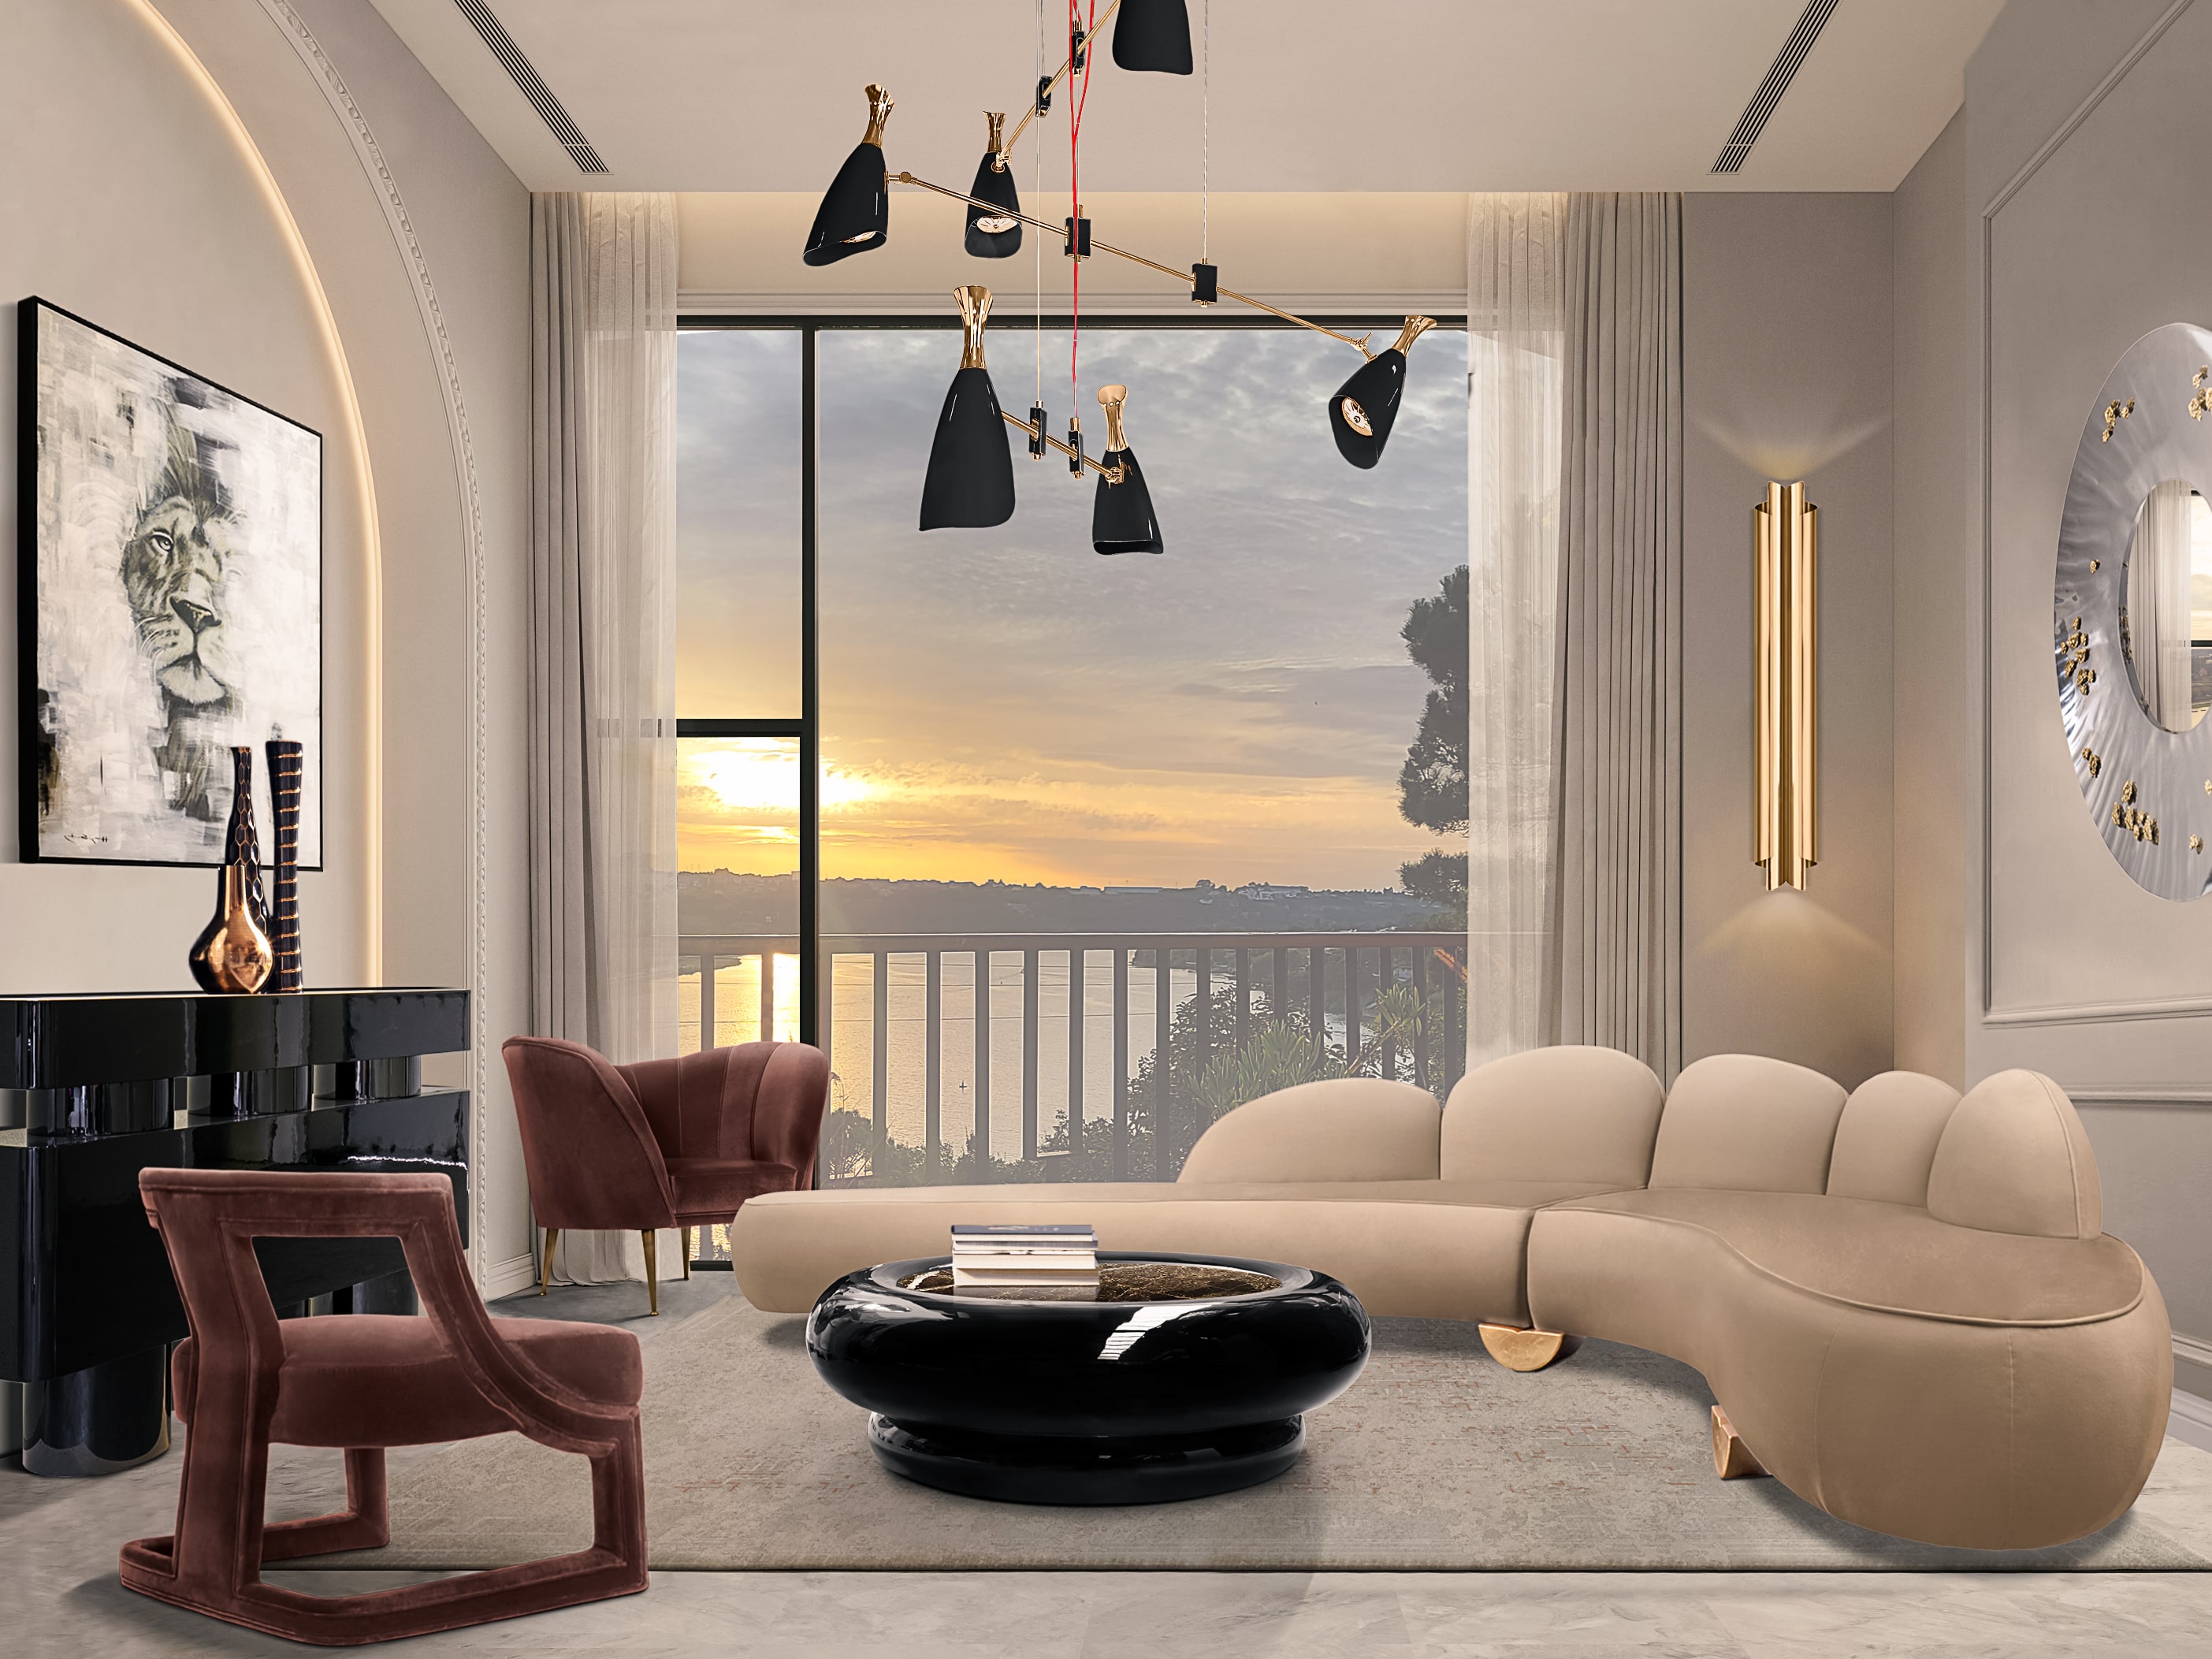 Smooth Contemporary Living Room Design With Curvy Sofa - Home'Society